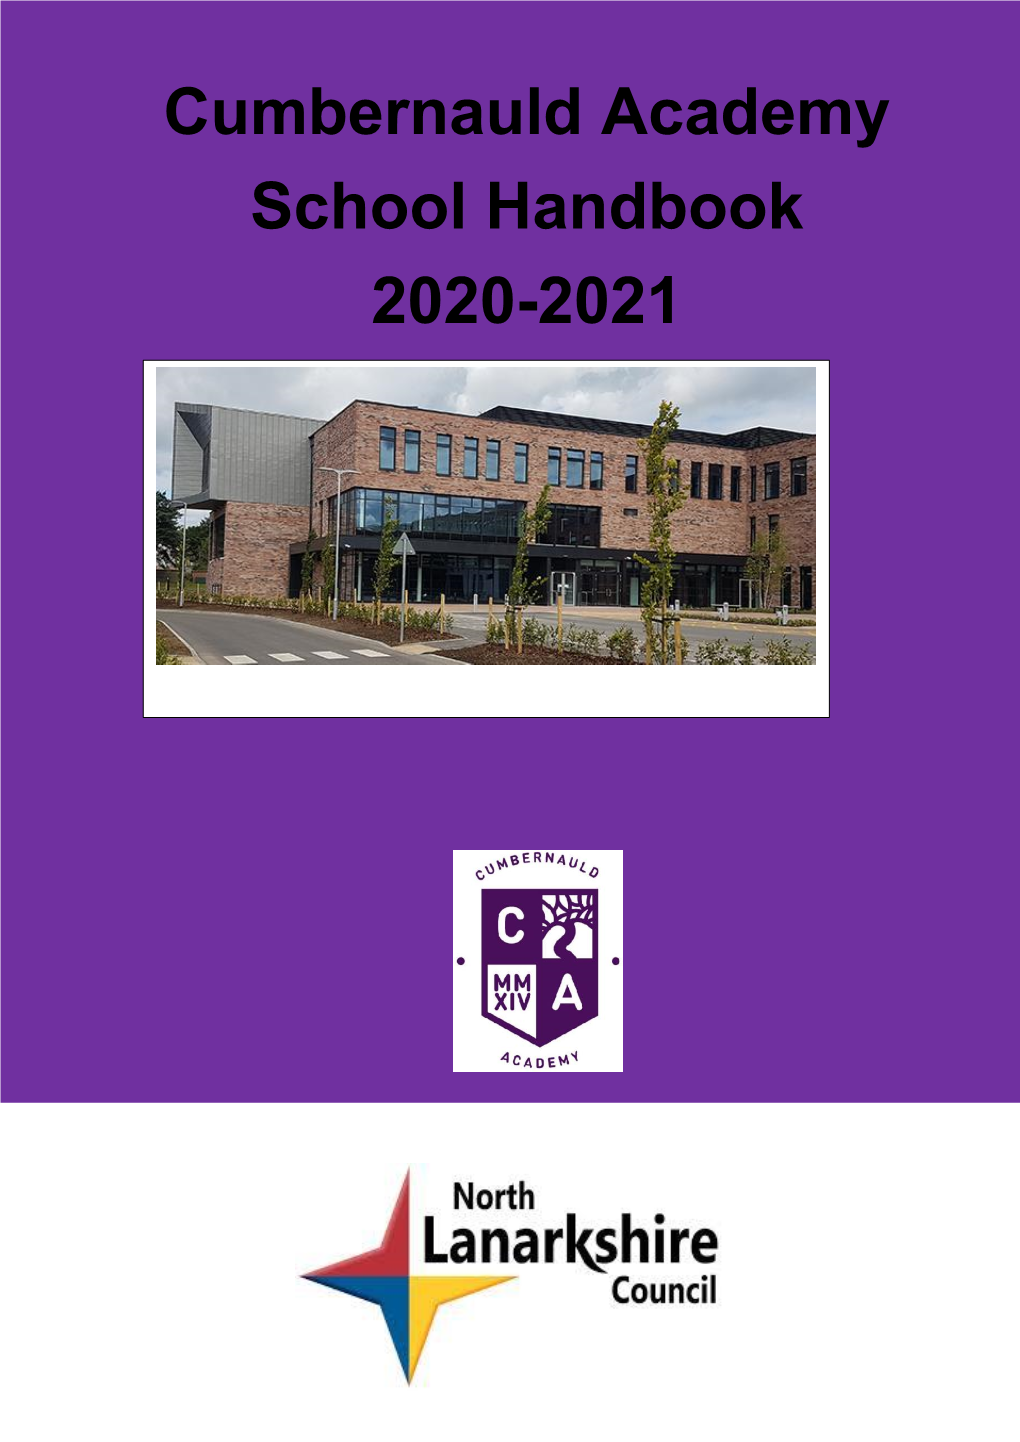 Cumbernauld Academy School Handbook 2020-2021